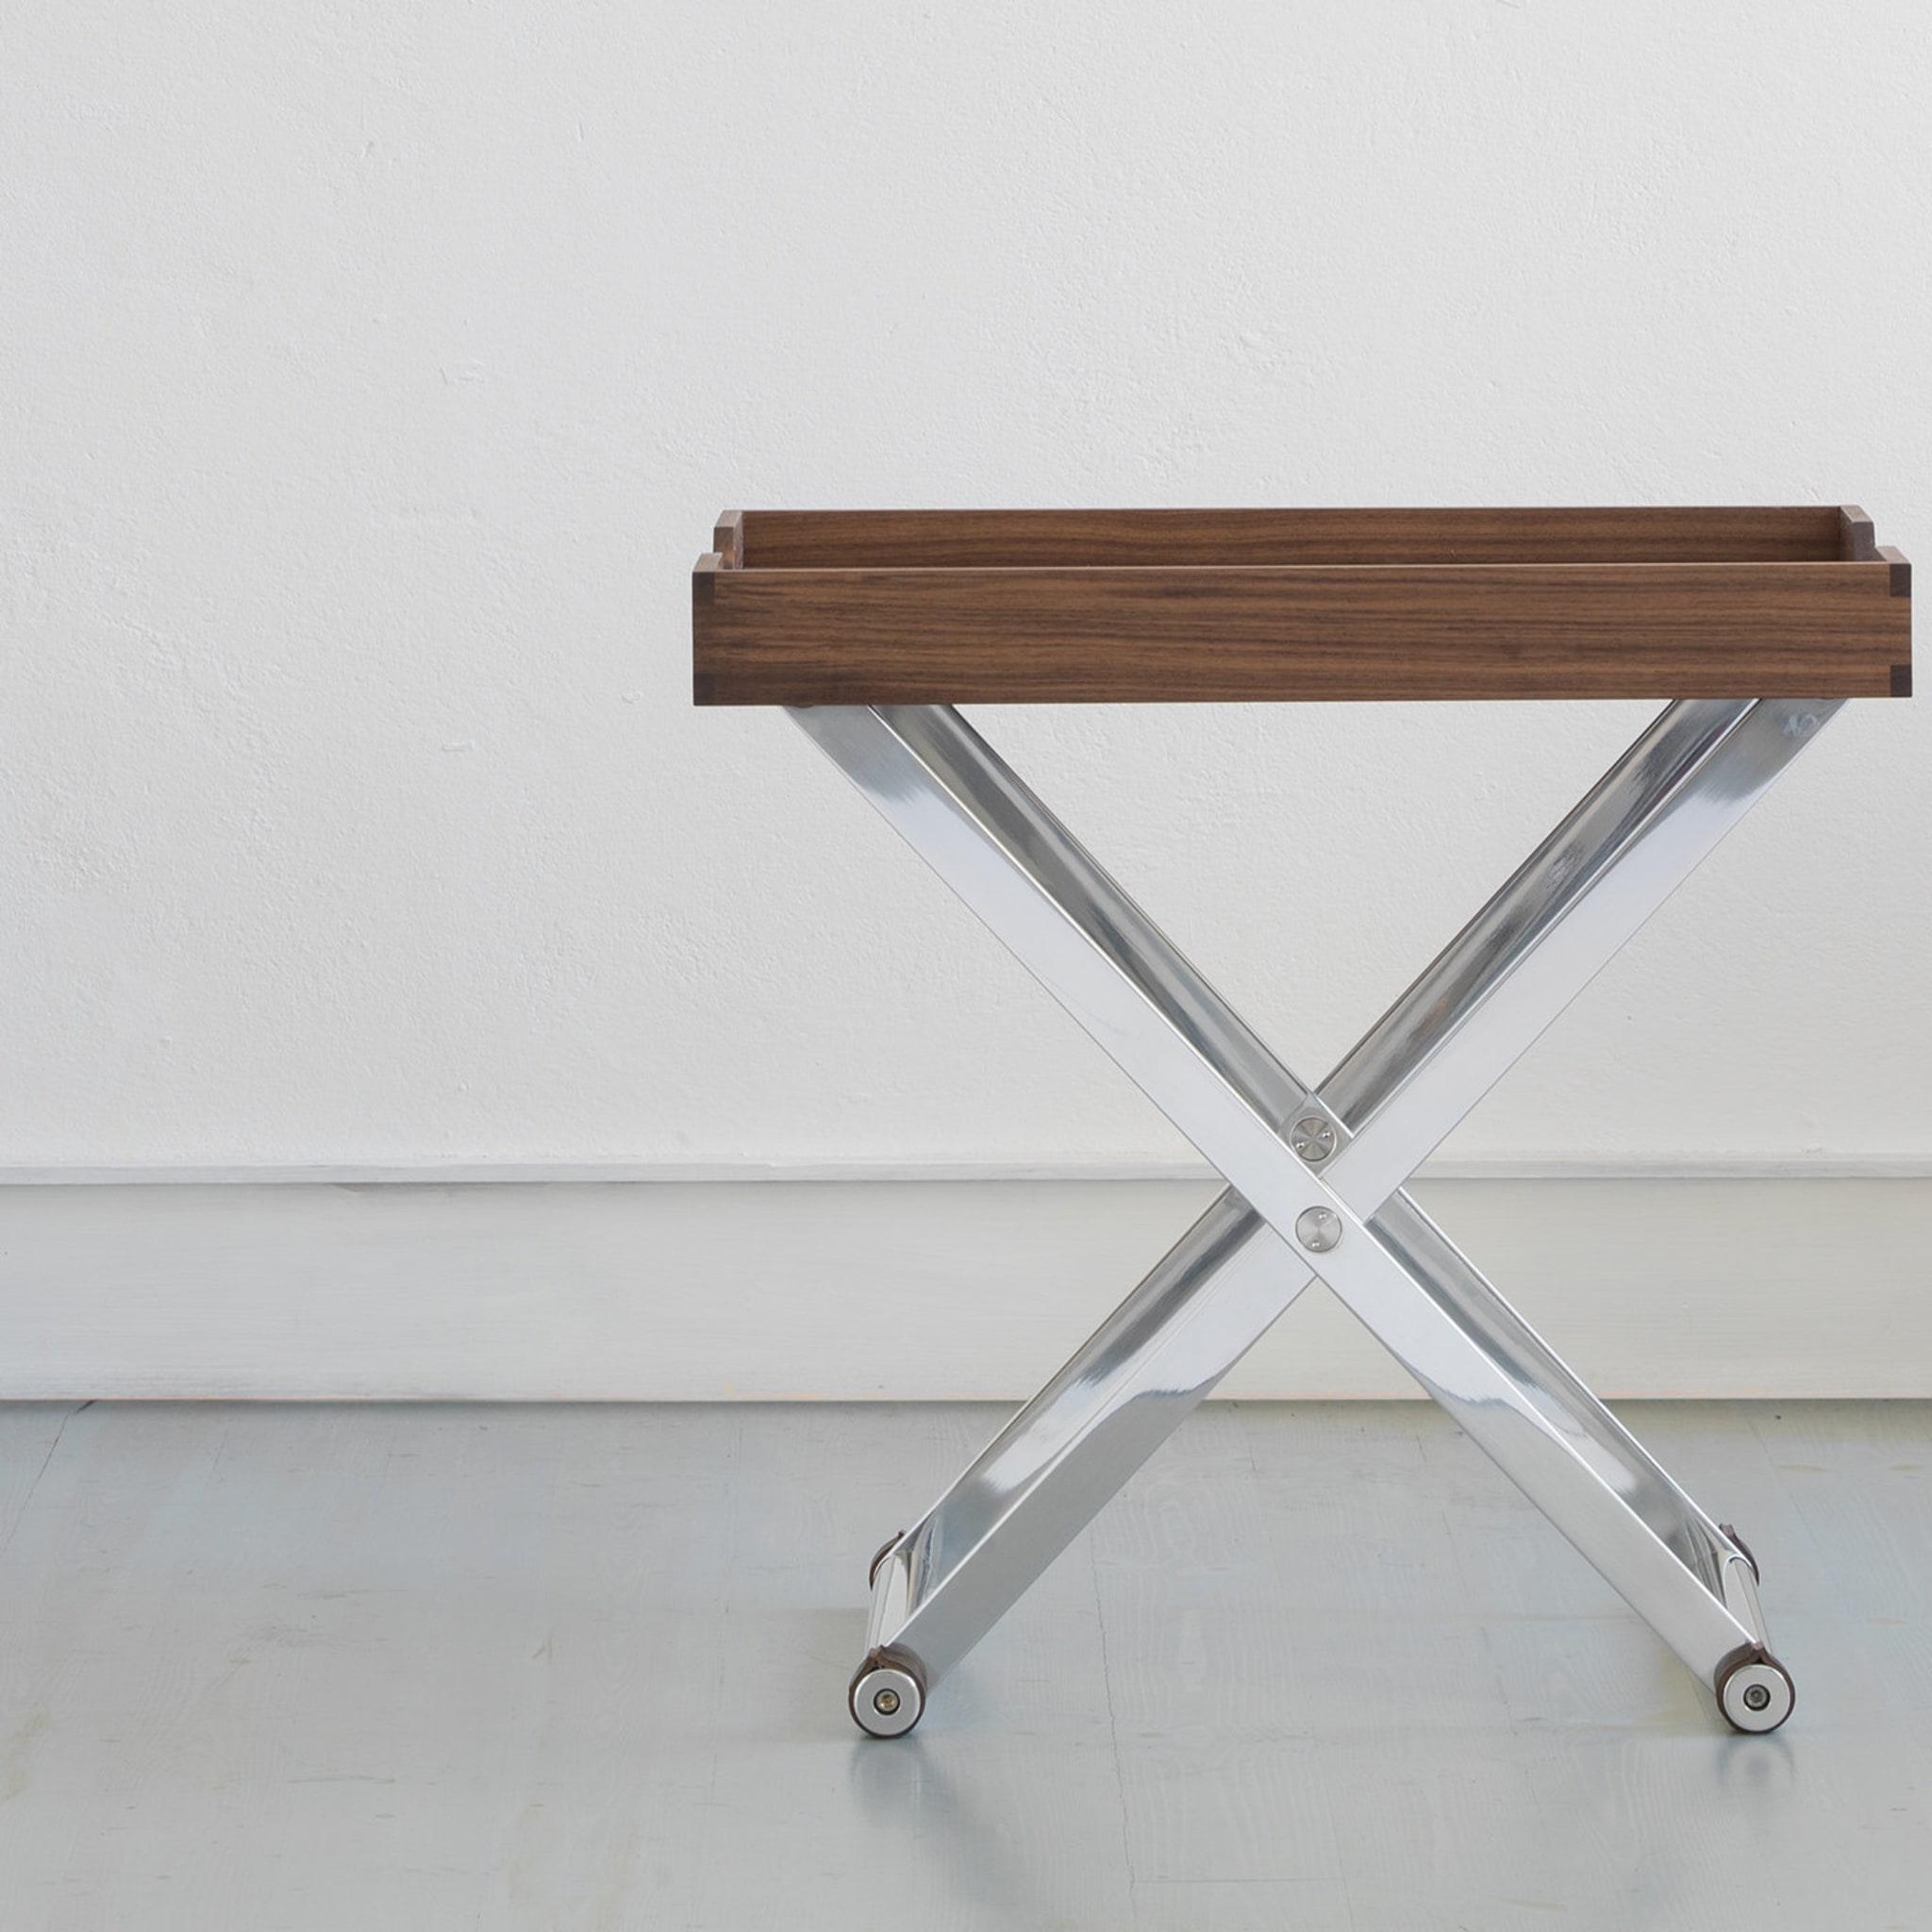 Andrea Foldable Table by Enrico Tonucci - Alternative view 1